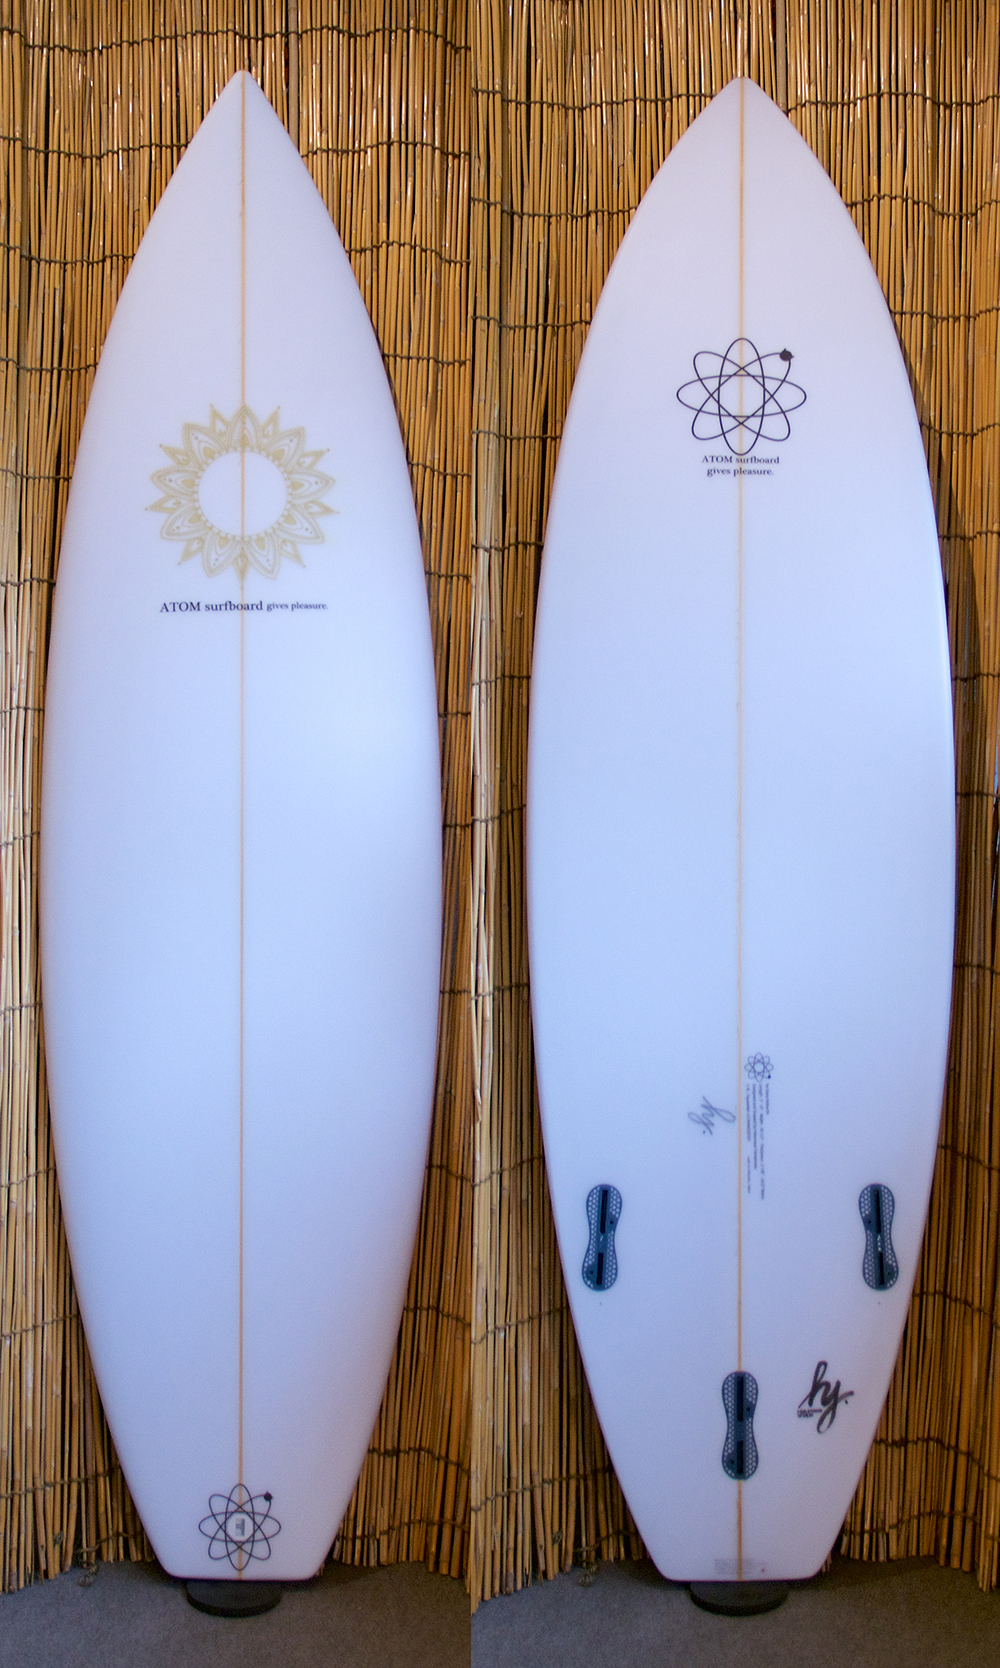 ATOM Surfboard Squawker2.0 model